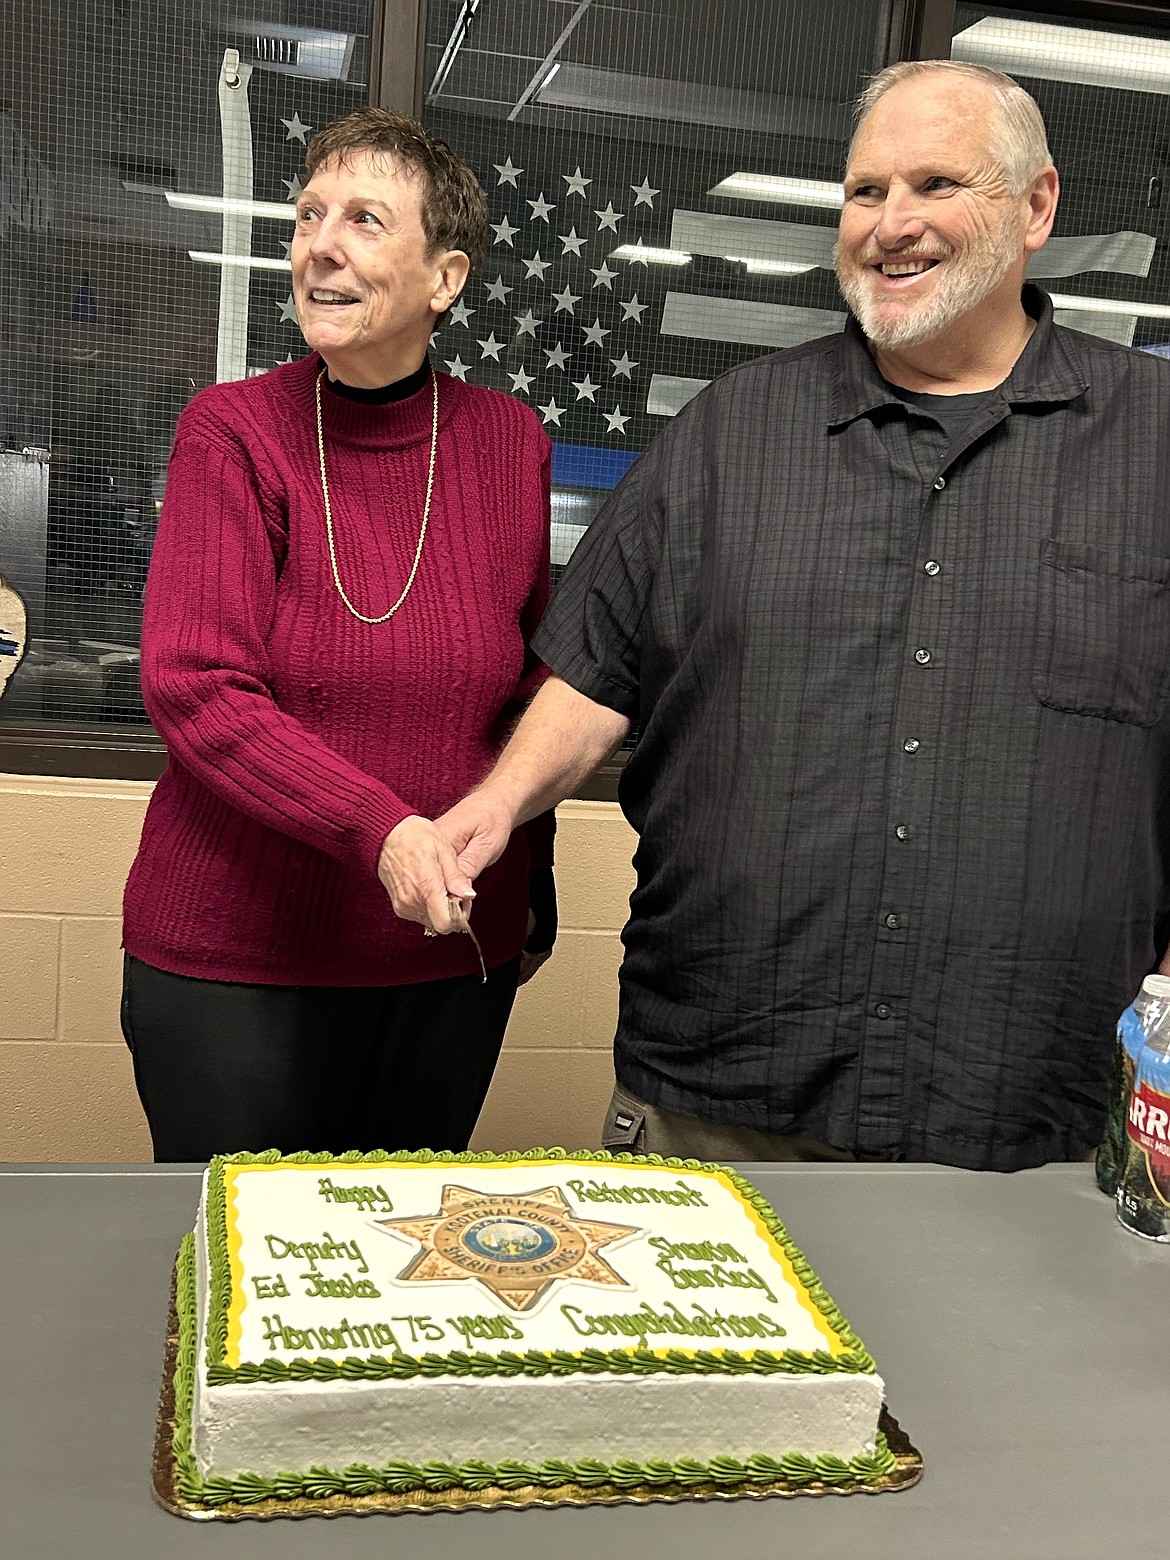 Kootenai County Sheriff's Office retirees Ed Jacobs and Sharron Barkley cut the cake during their retirement celebration Monday.